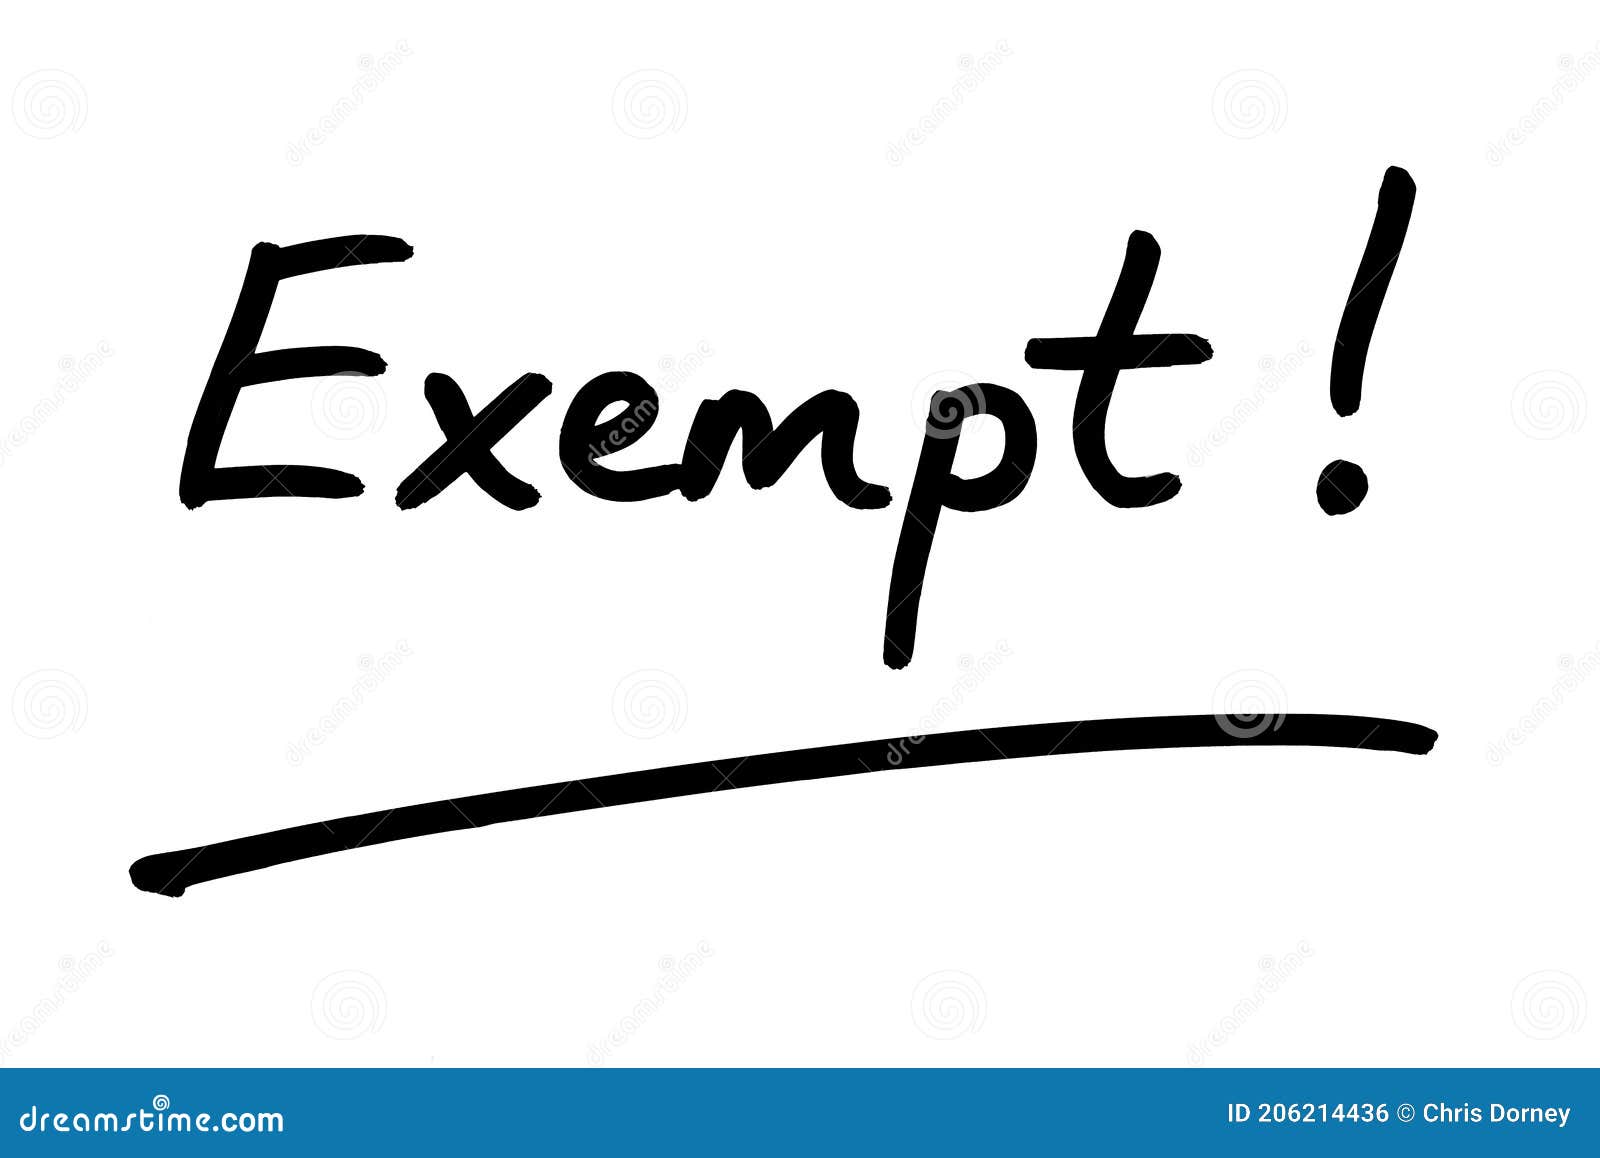 exempt